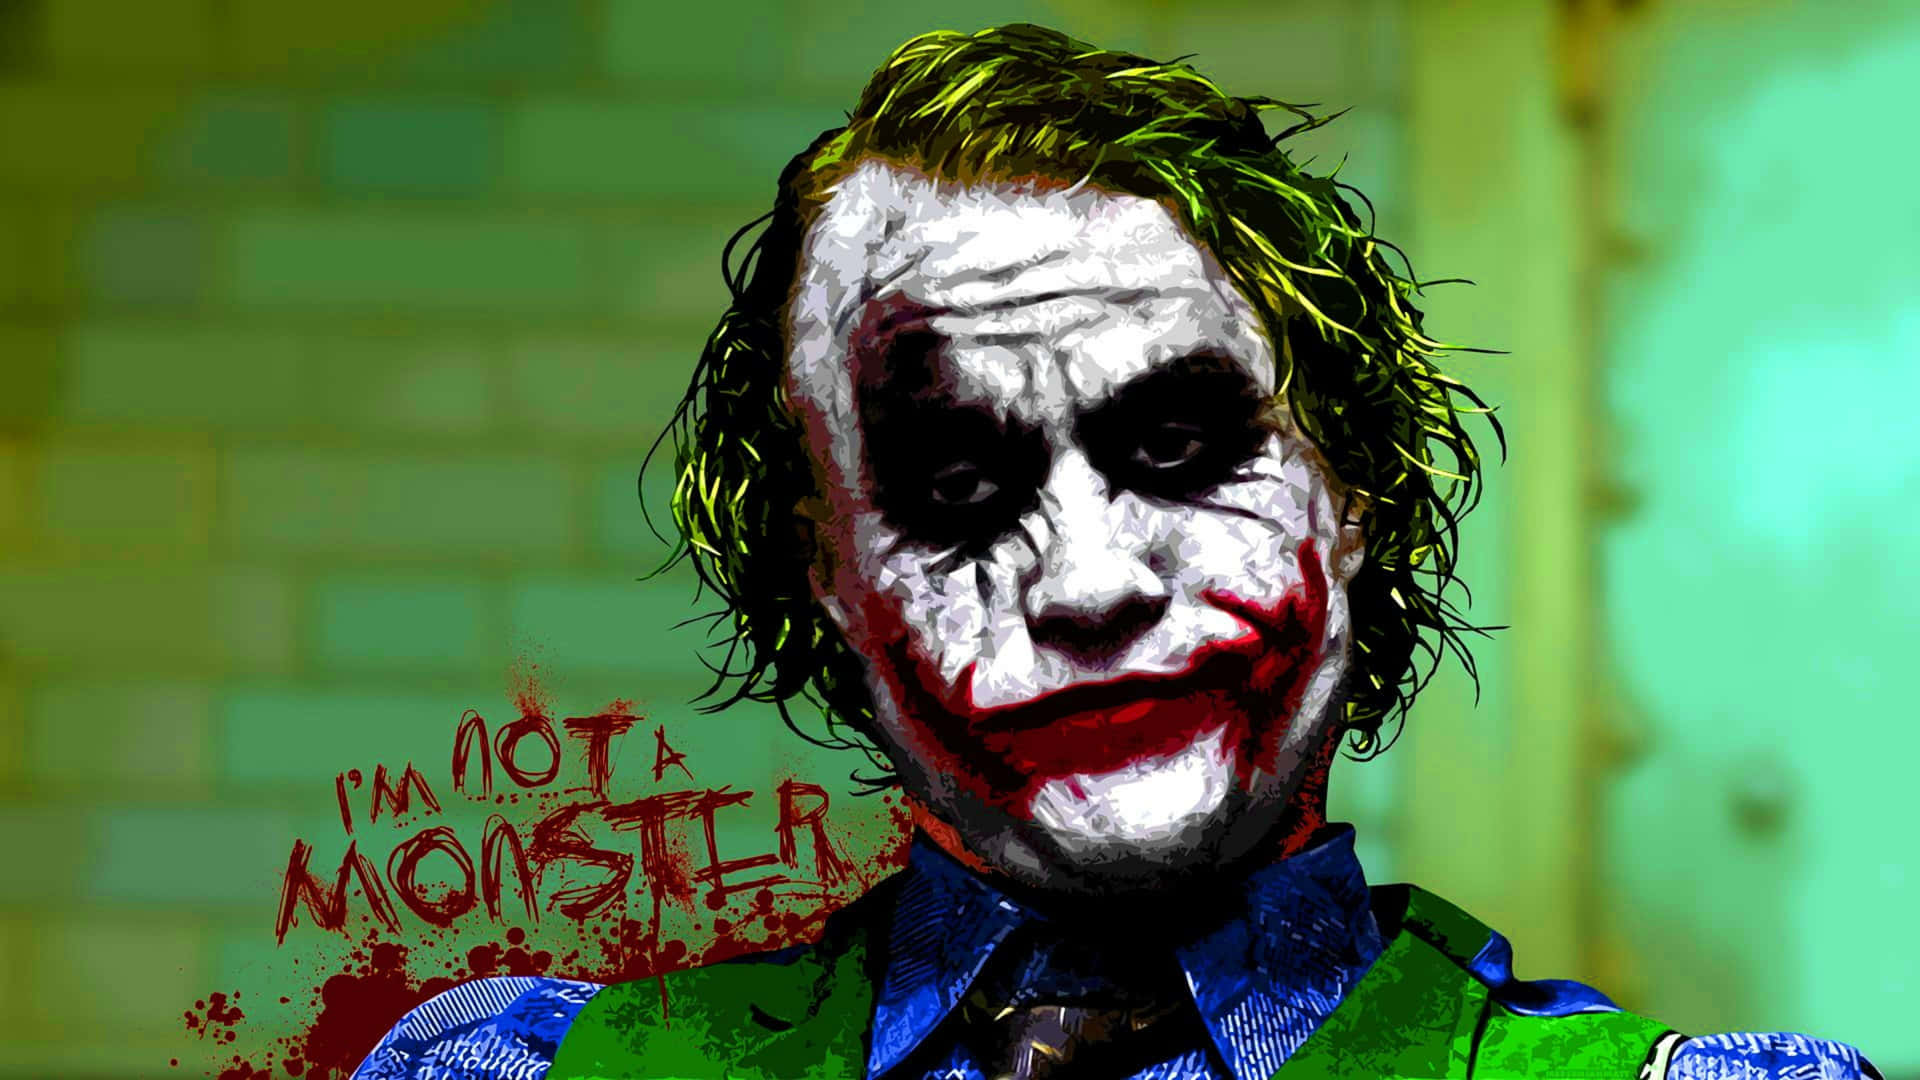 The Dark Knight Joker in 4K Ultra HD Wallpaper